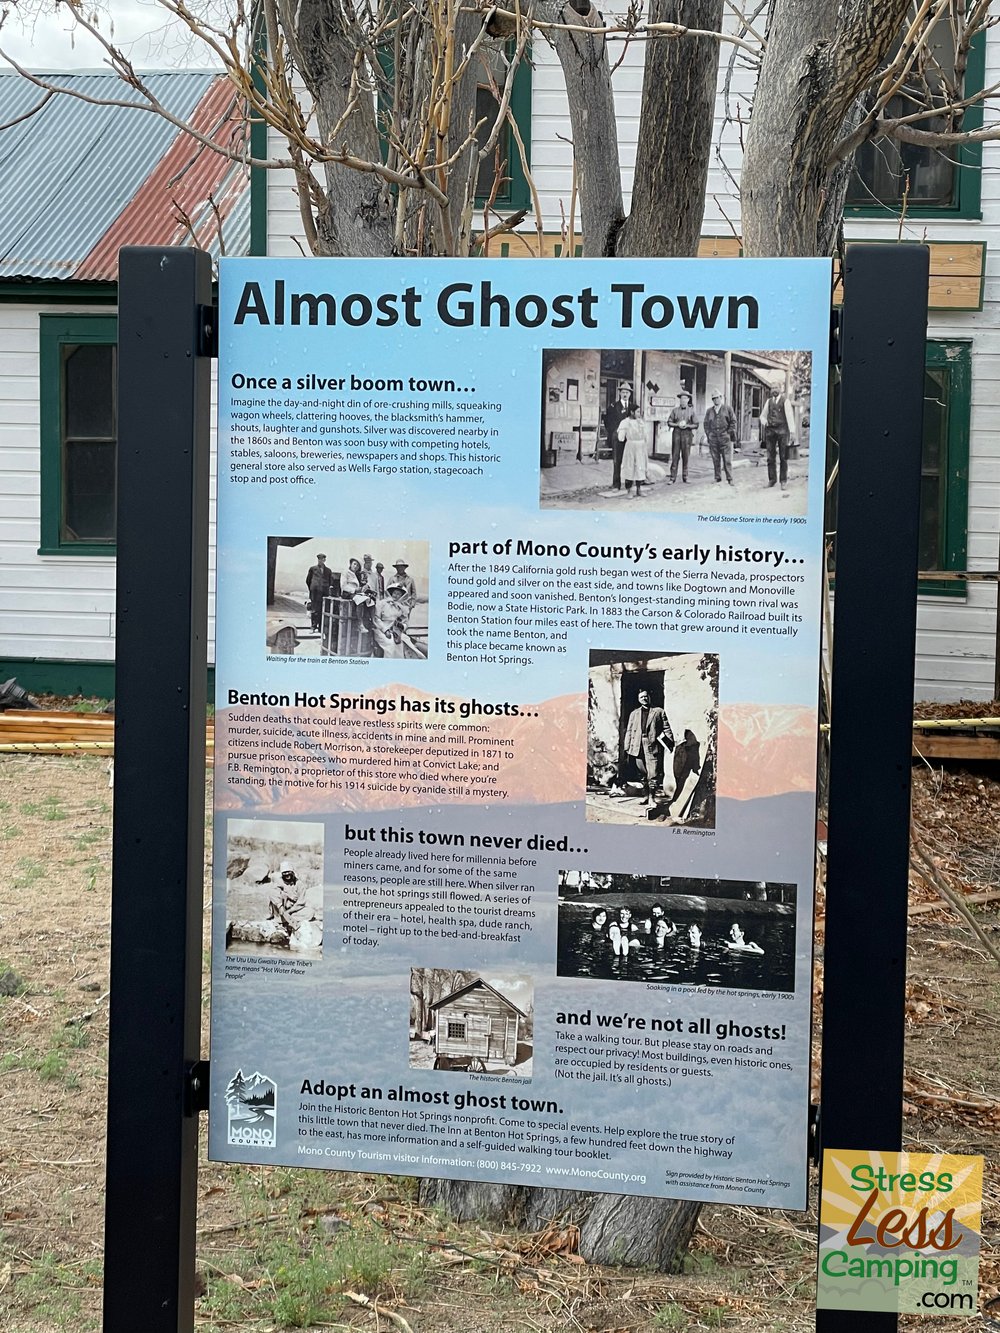 Ghost town sign in Benton Hot Springs